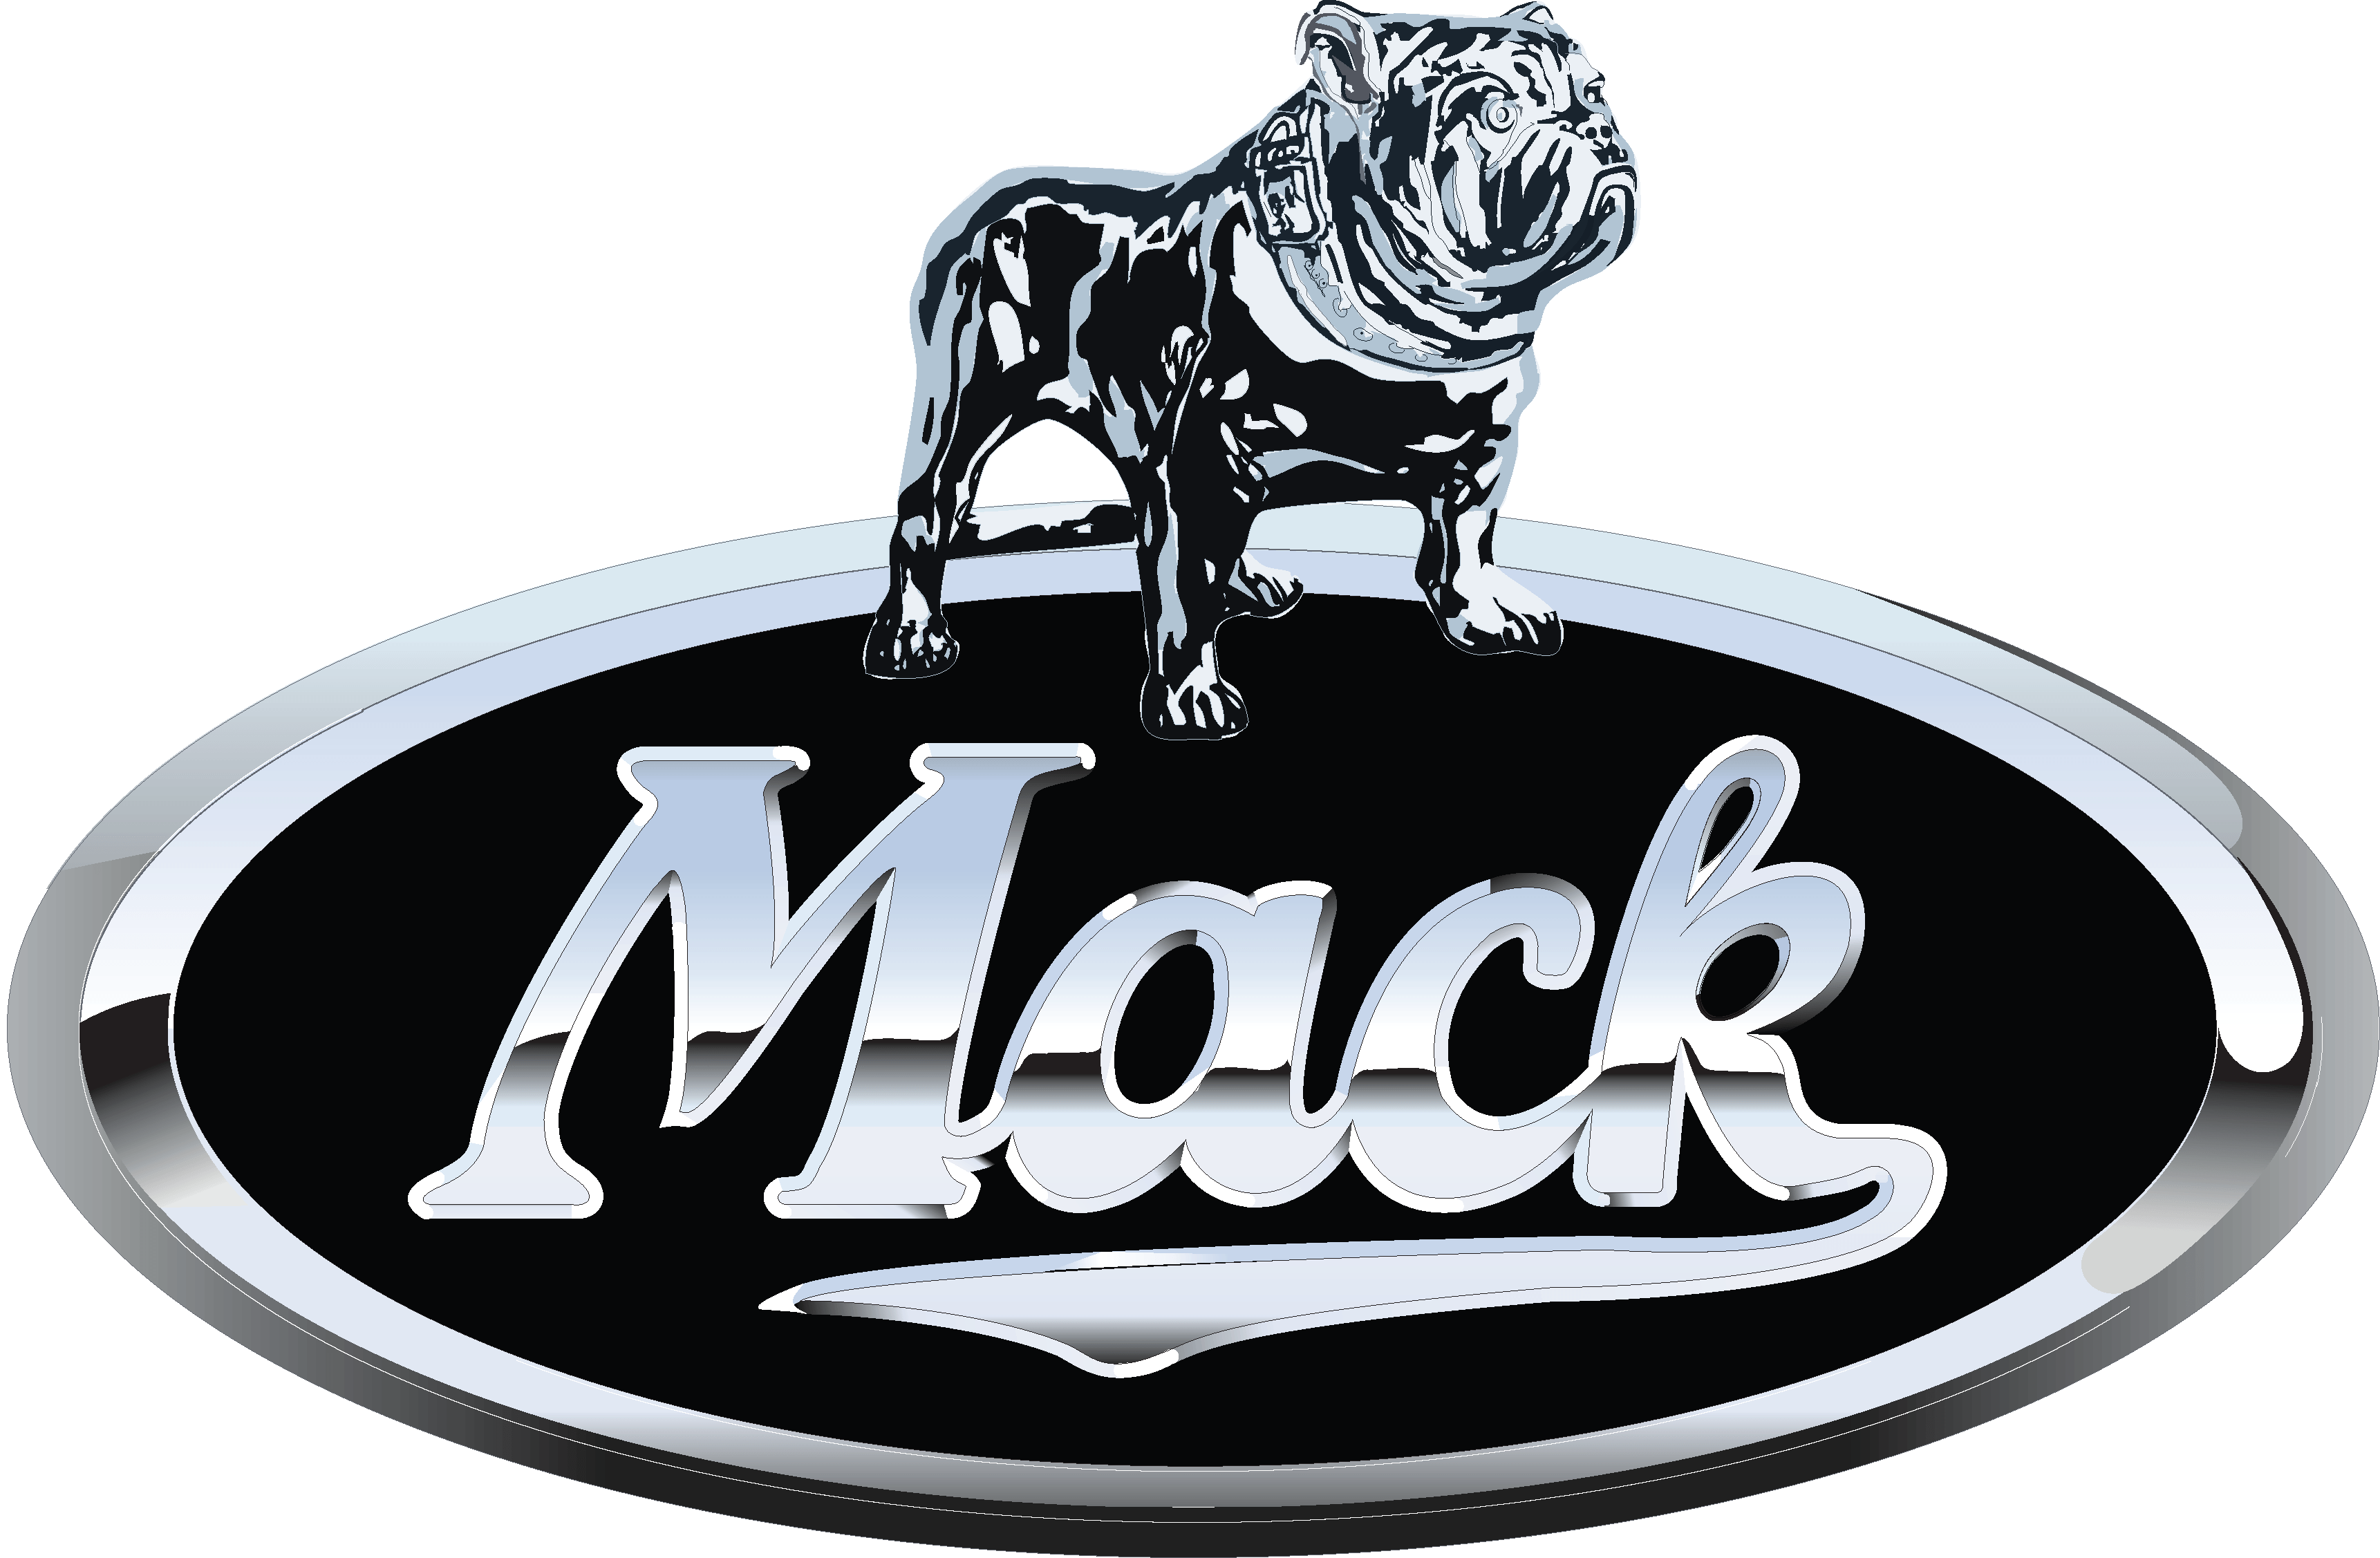 Mack Trucks Logo png